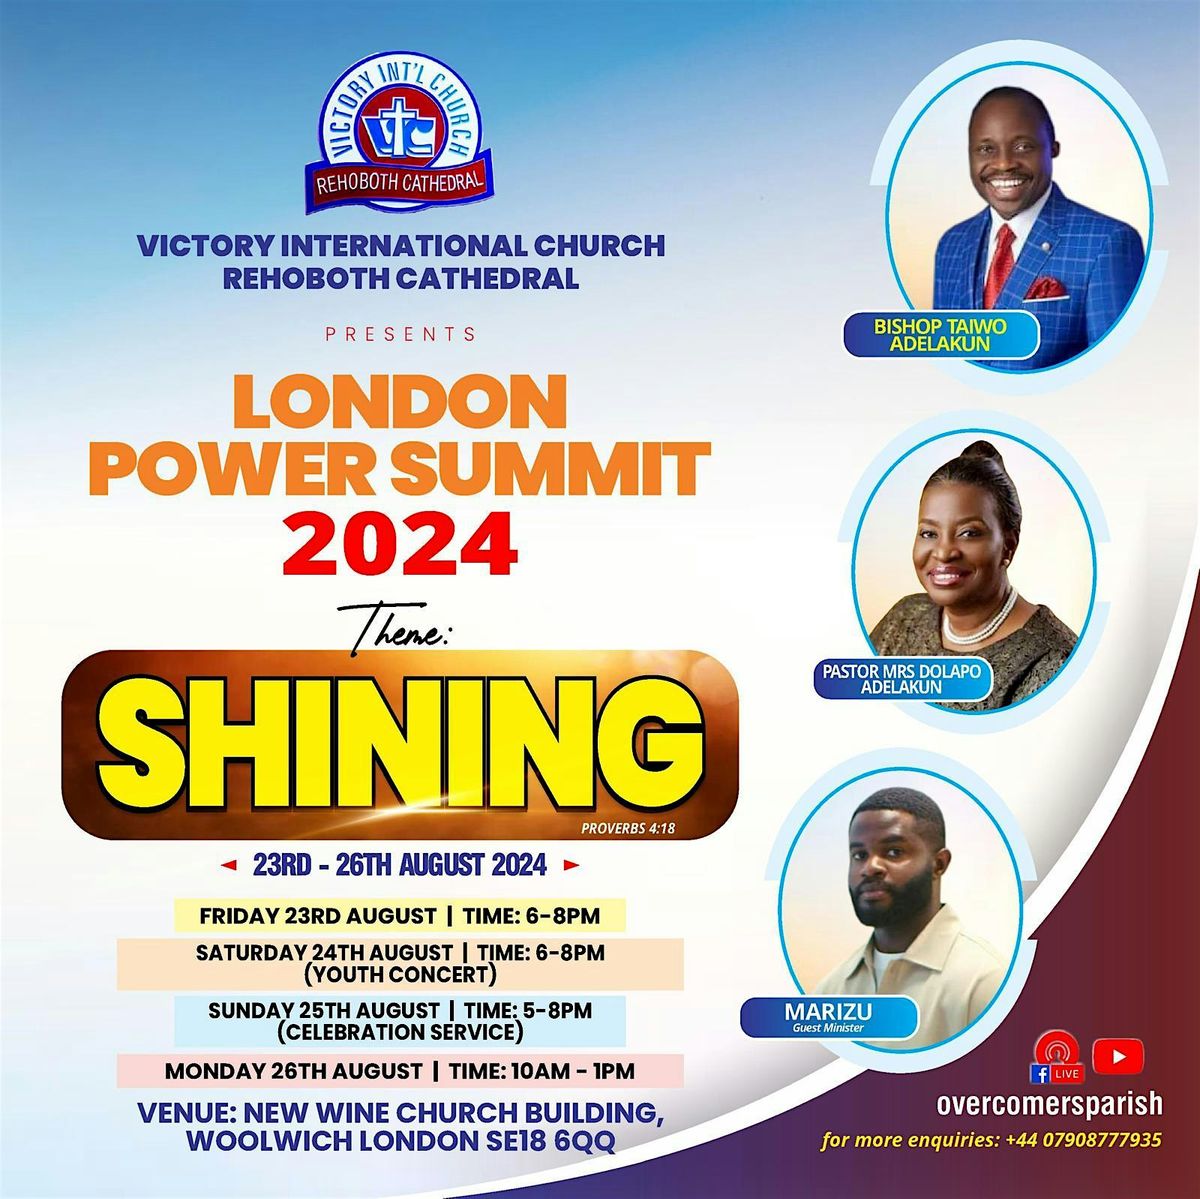 London Power Summit 2024 - Theme: Shining